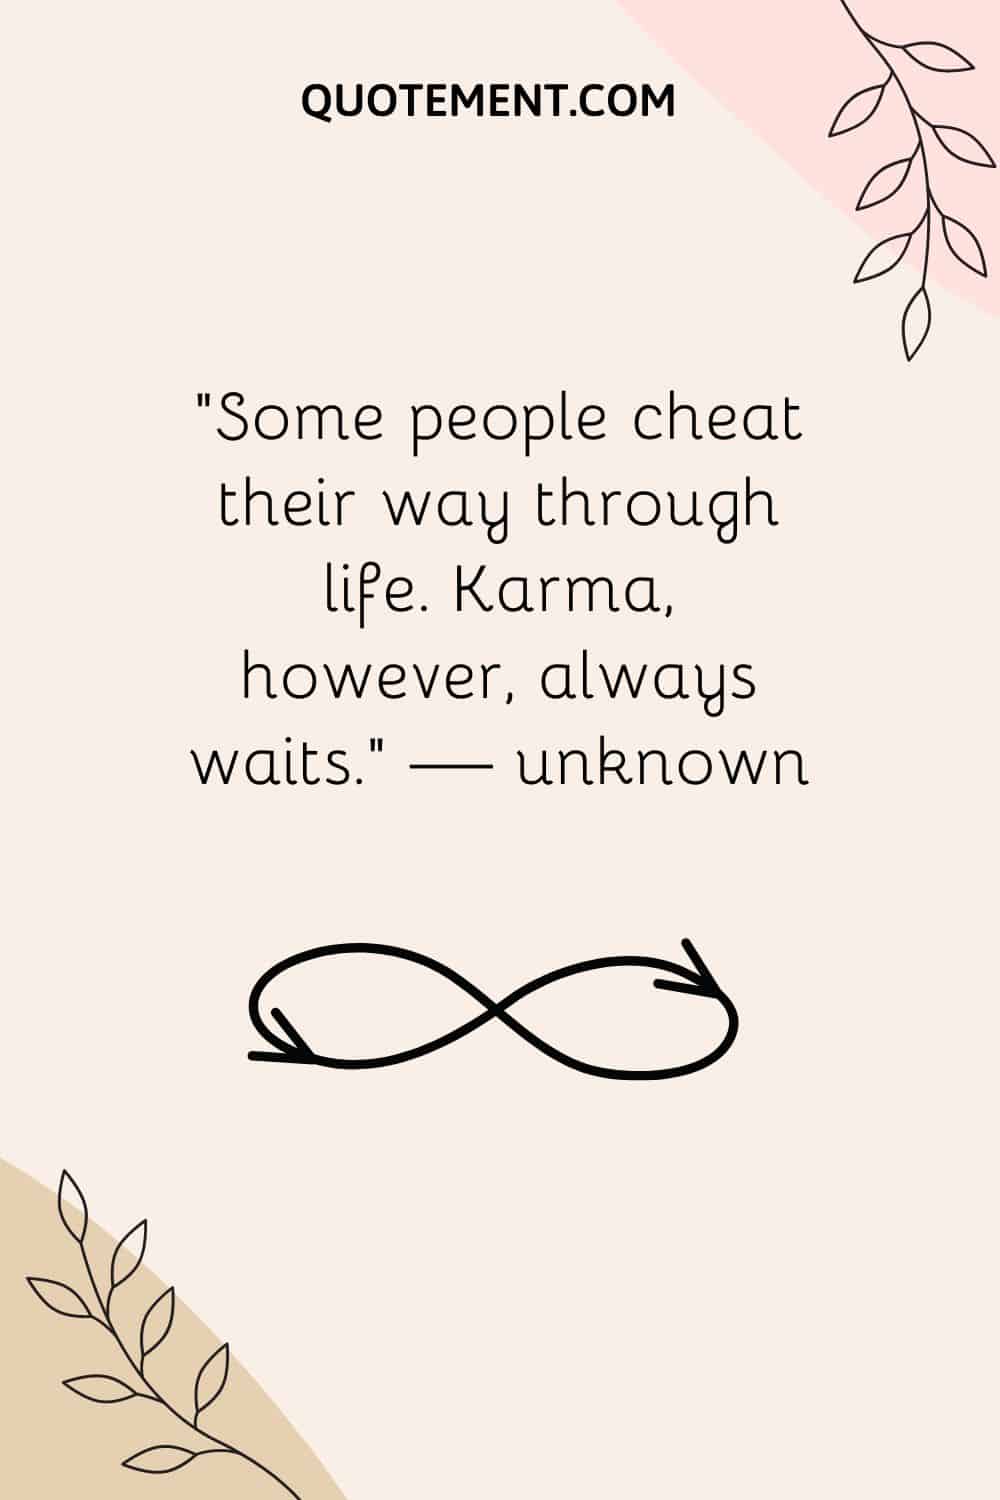 Some people cheat their way through life. Karma, however, always waits